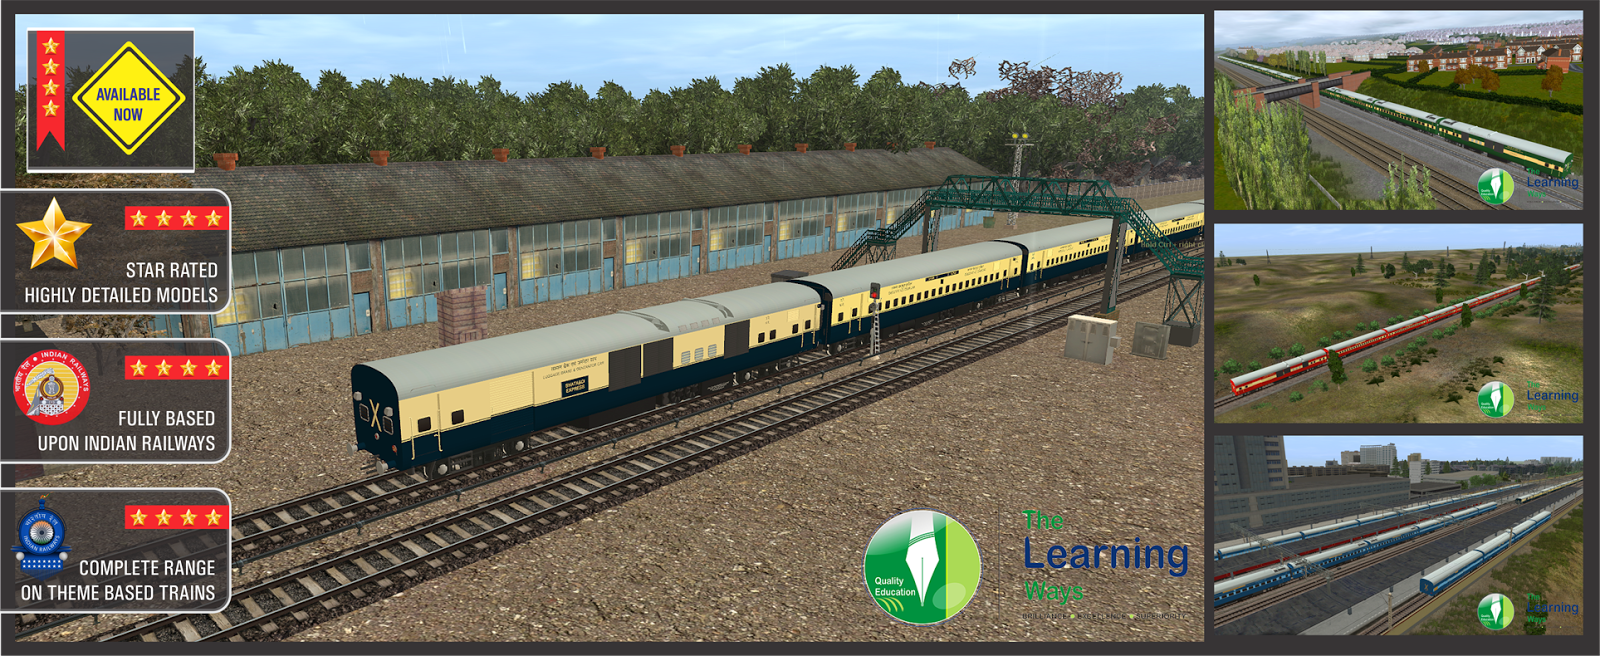 trainz locomotives free download